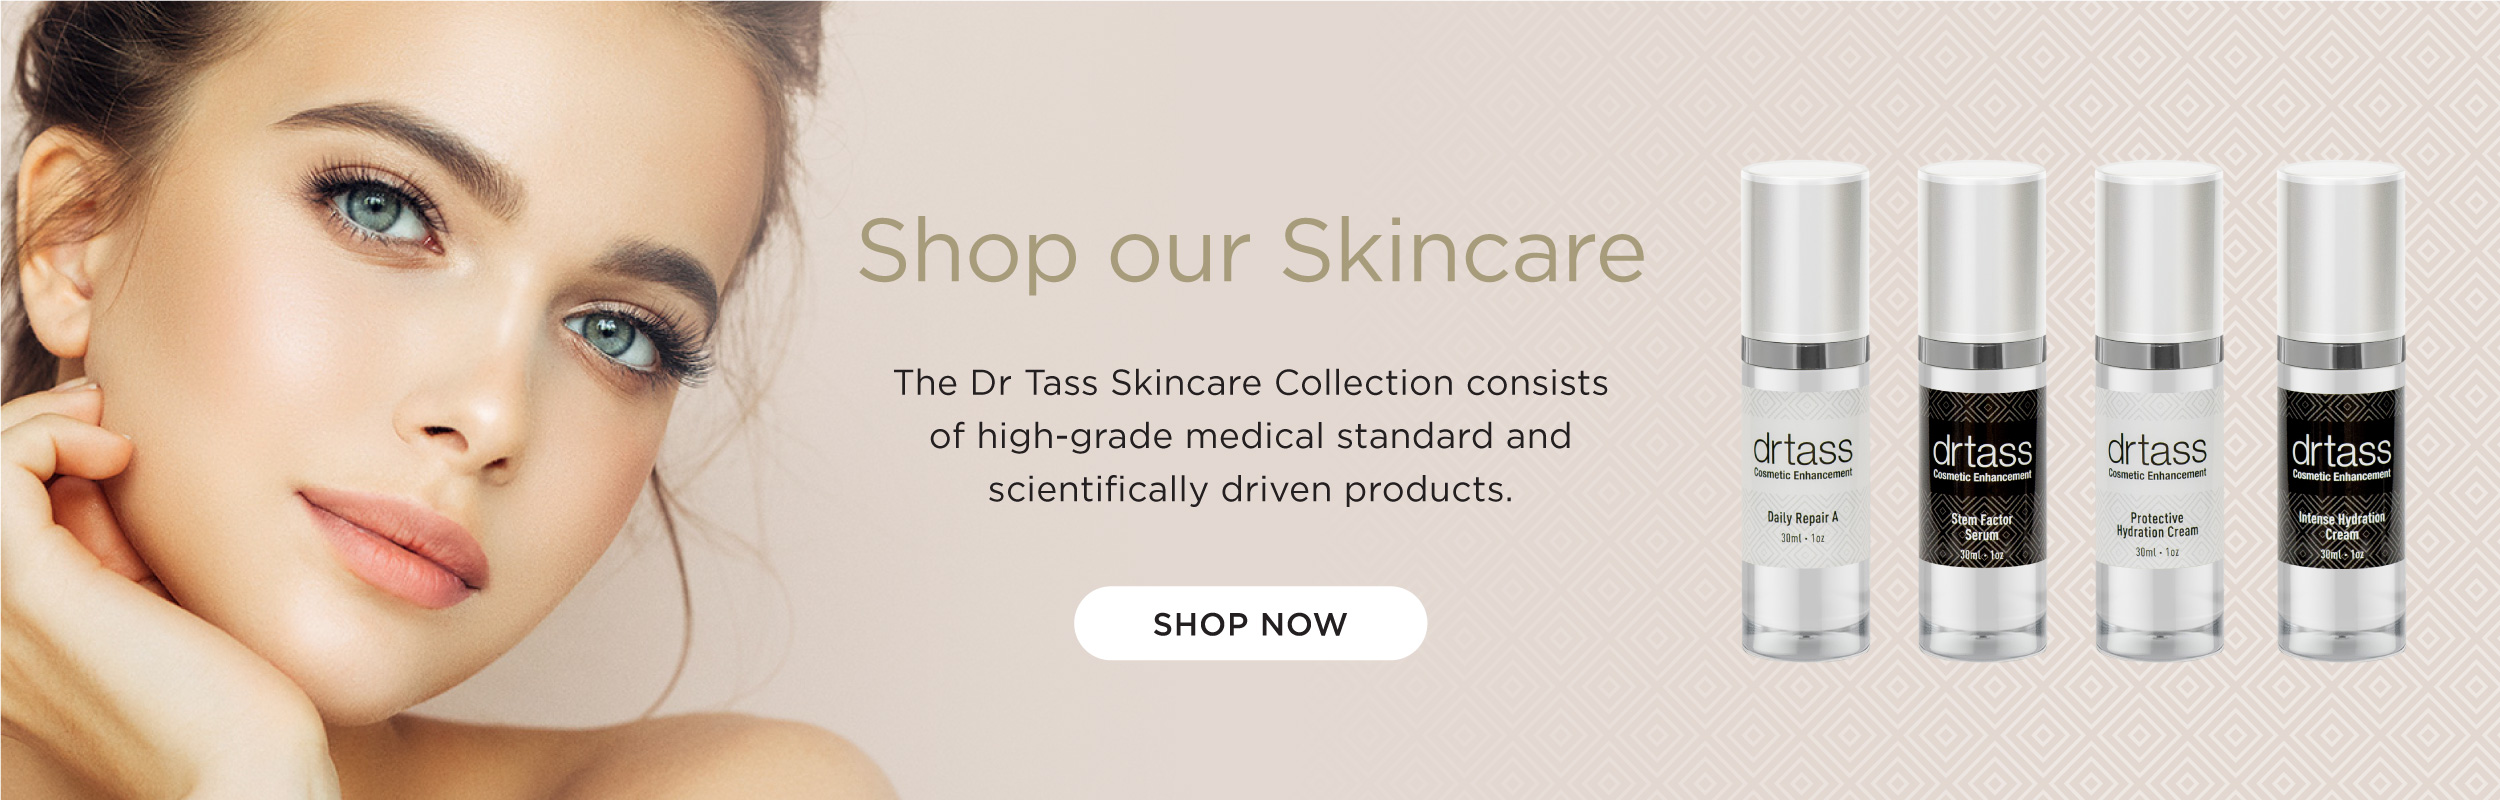 Shop Our Skincare